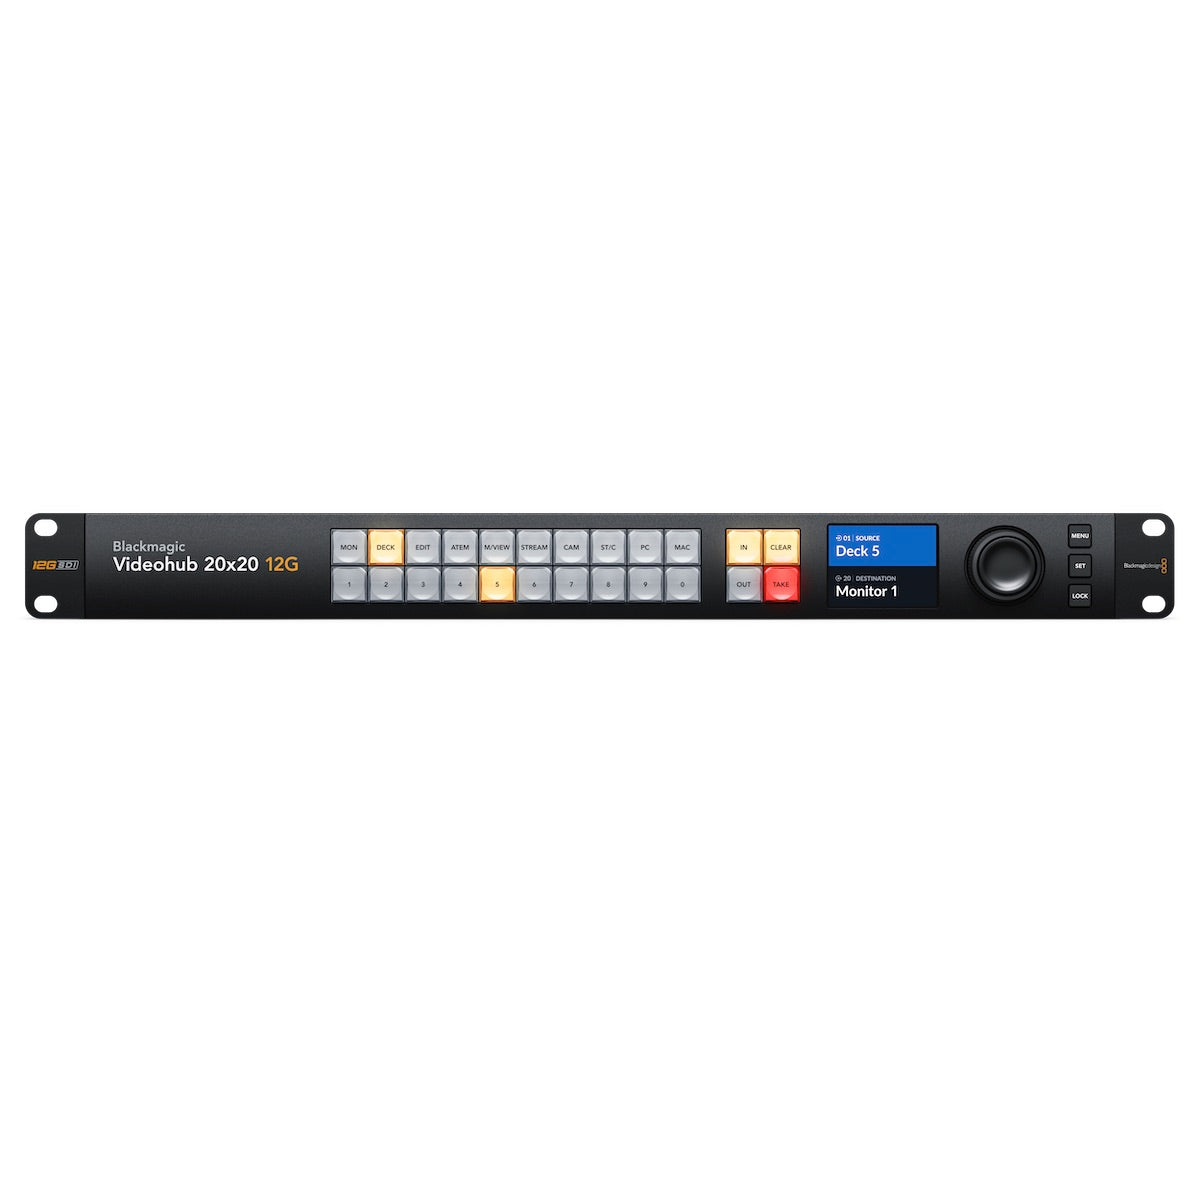 Blackmagic Design Videohub 20x20 12G - 12G-SDI Video Router, front labels UI